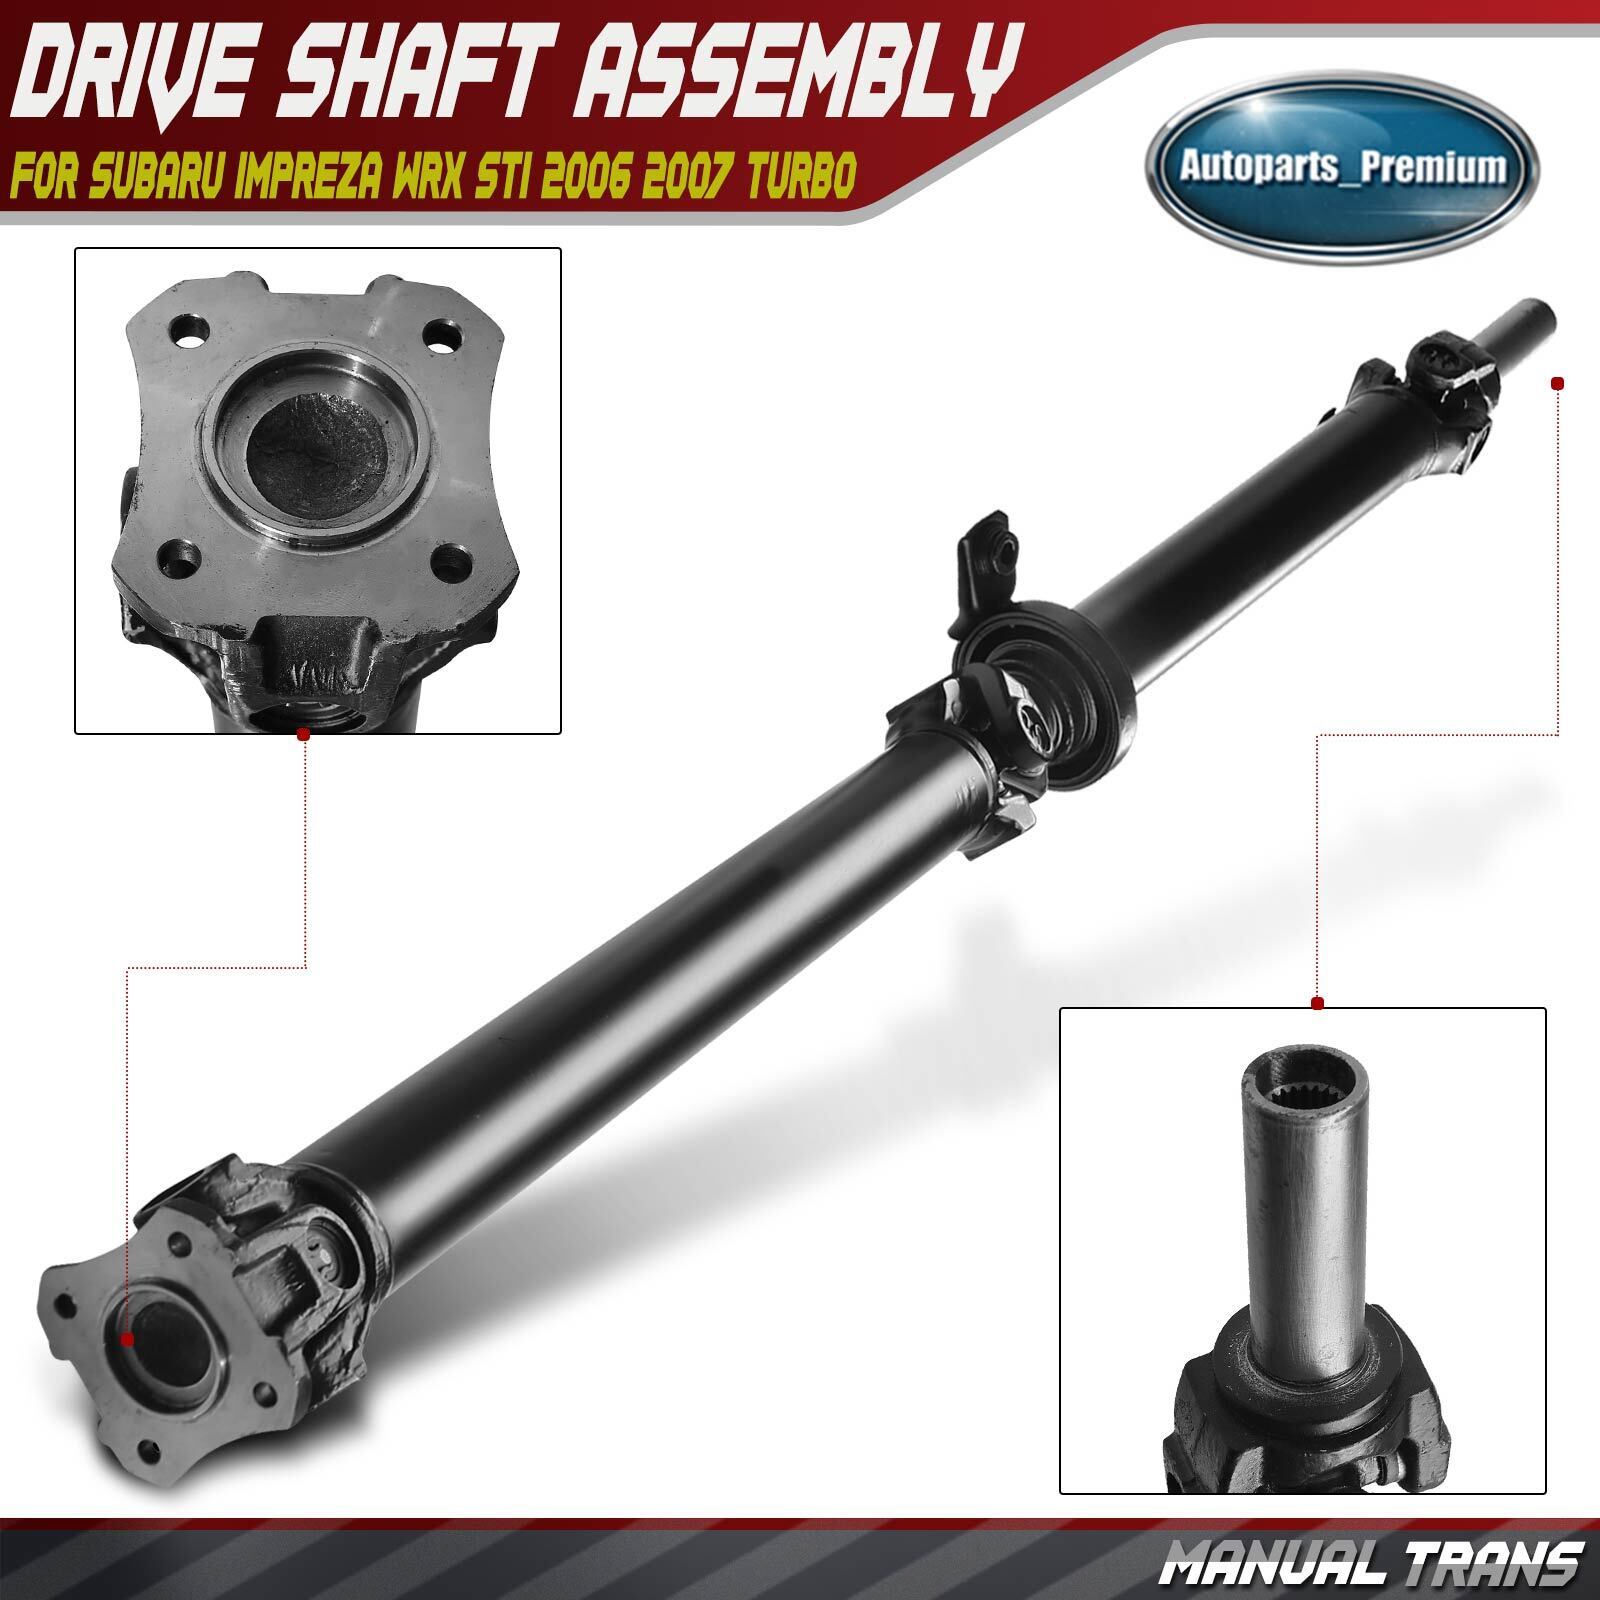 Driveshaft Assembly for Subaru Impreza WRX STI 2006 2007 Turbo w/ Manual Trans